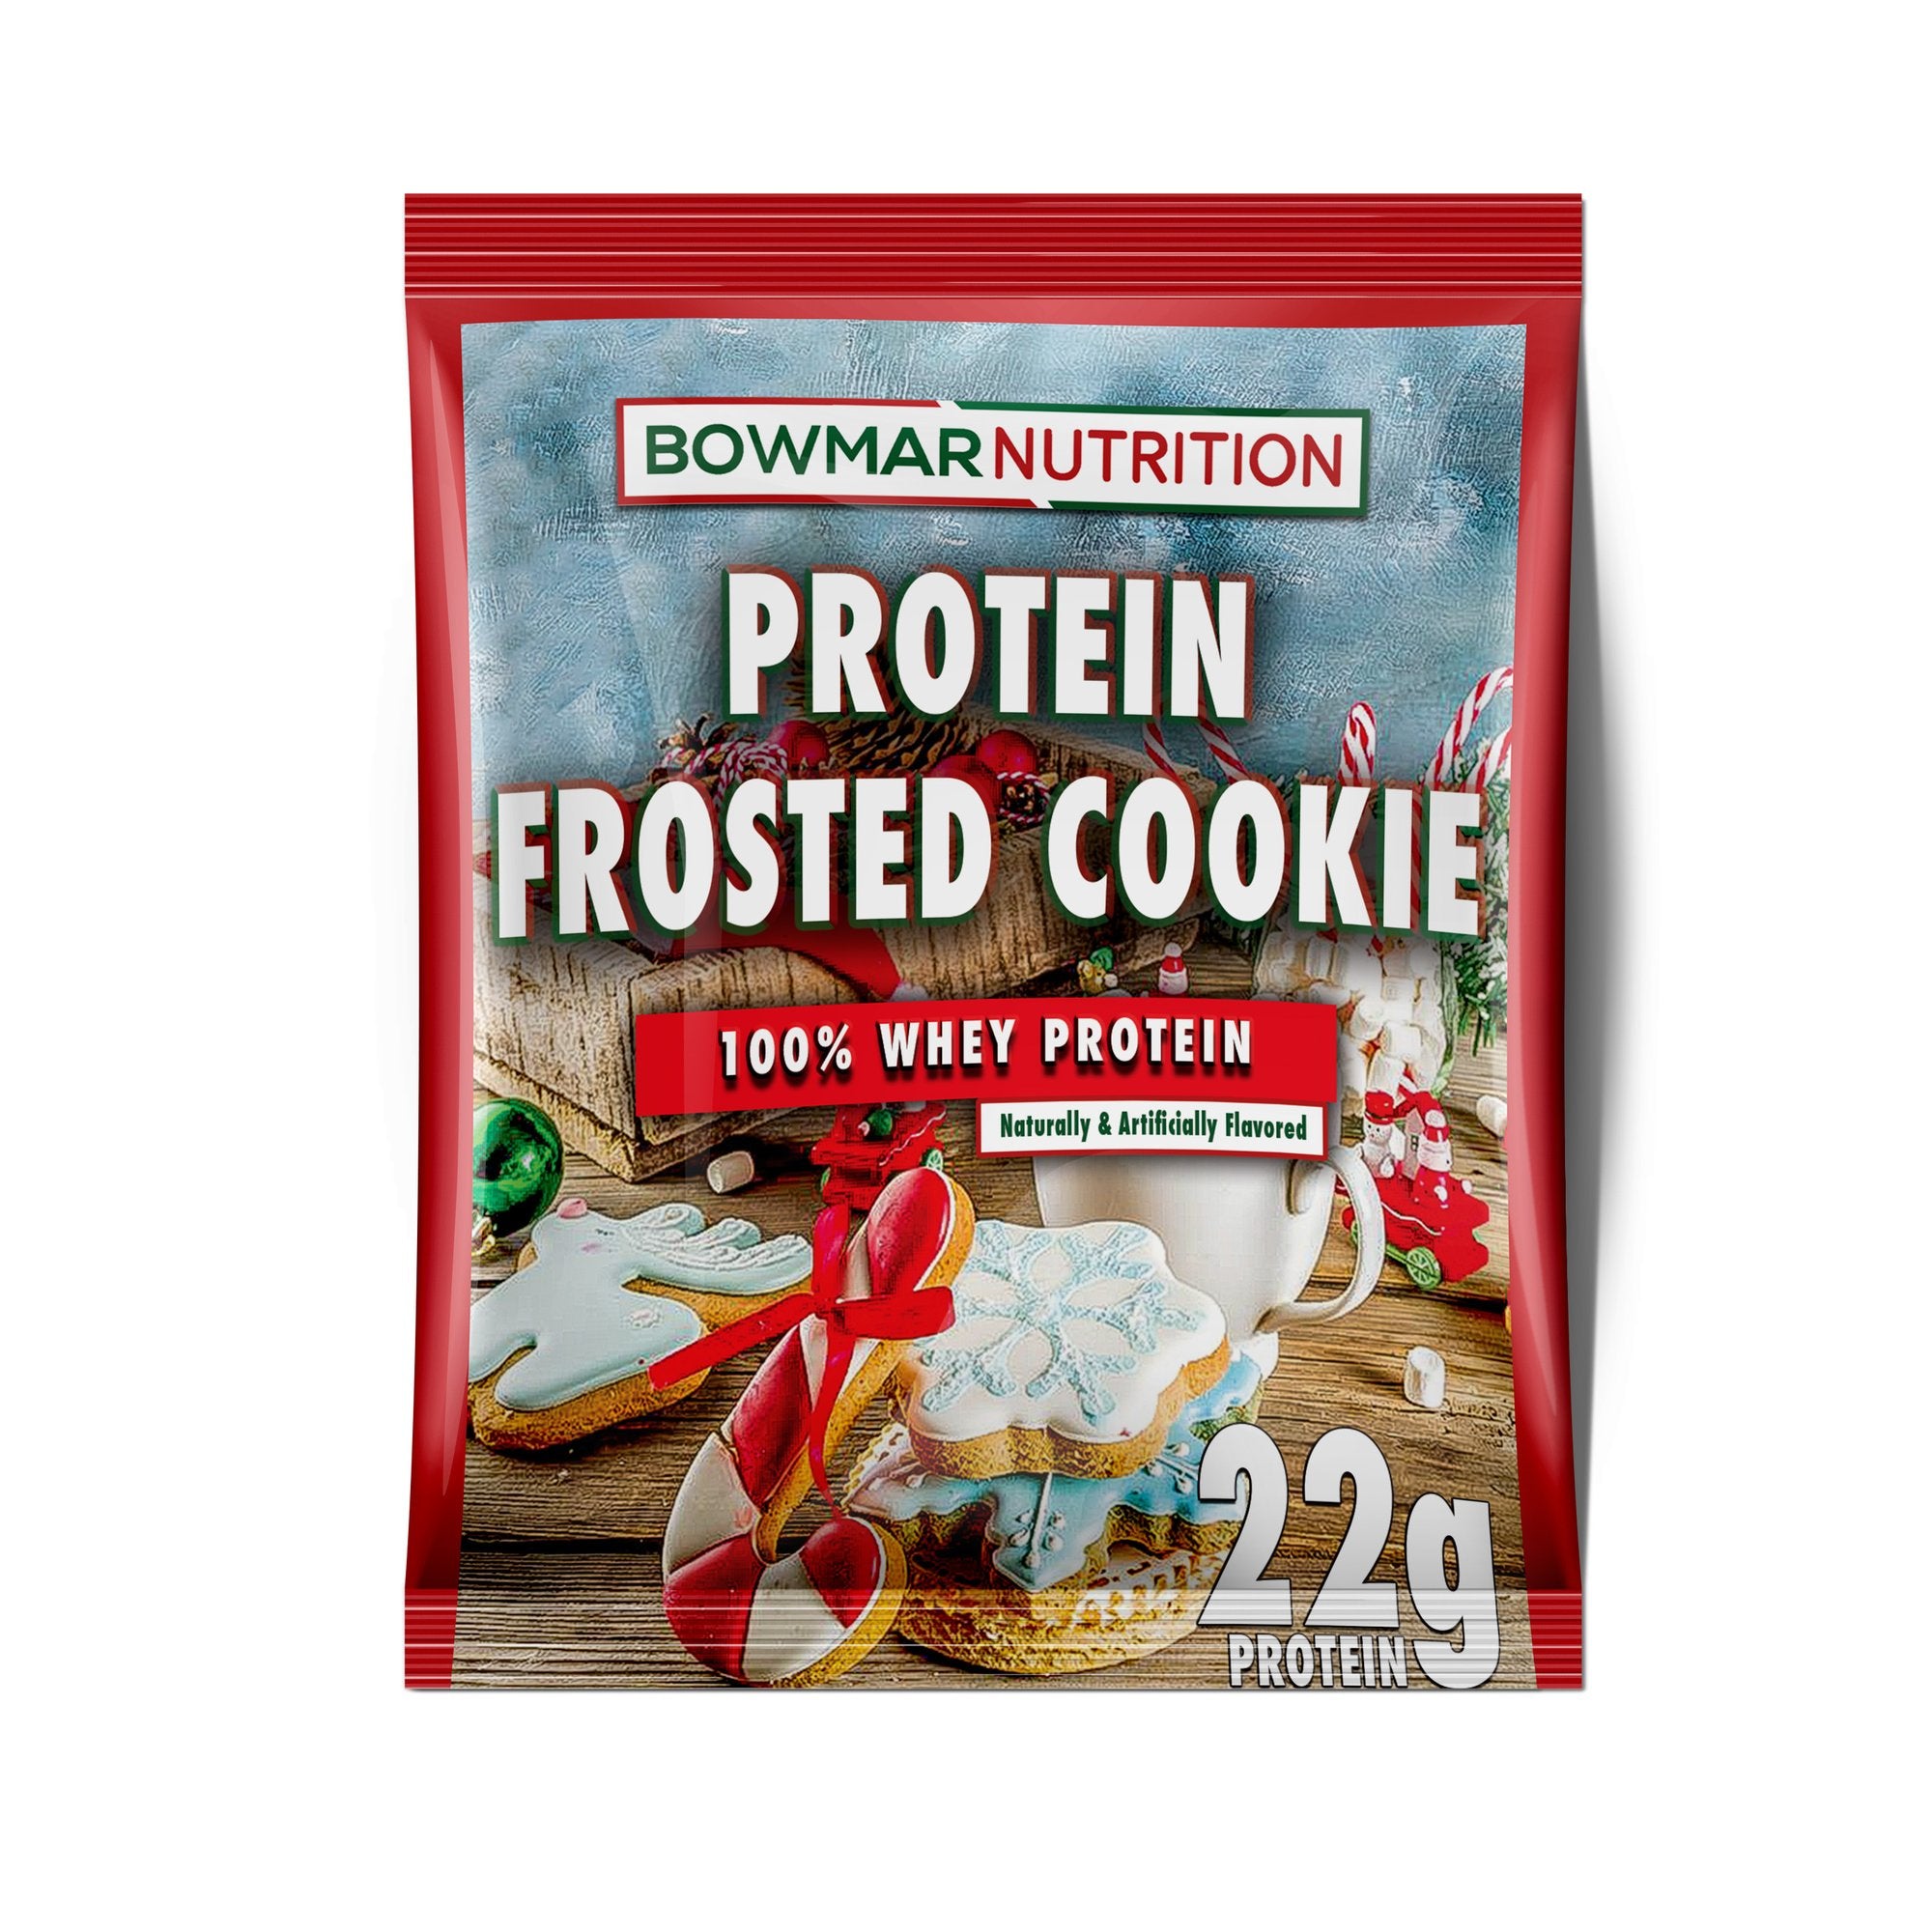 Bowmar Whey Protein Powder Sample (1 serving) bowmar-protein-powder-sachet-1-packet Protein Snacks Frosted Cookie bowmar